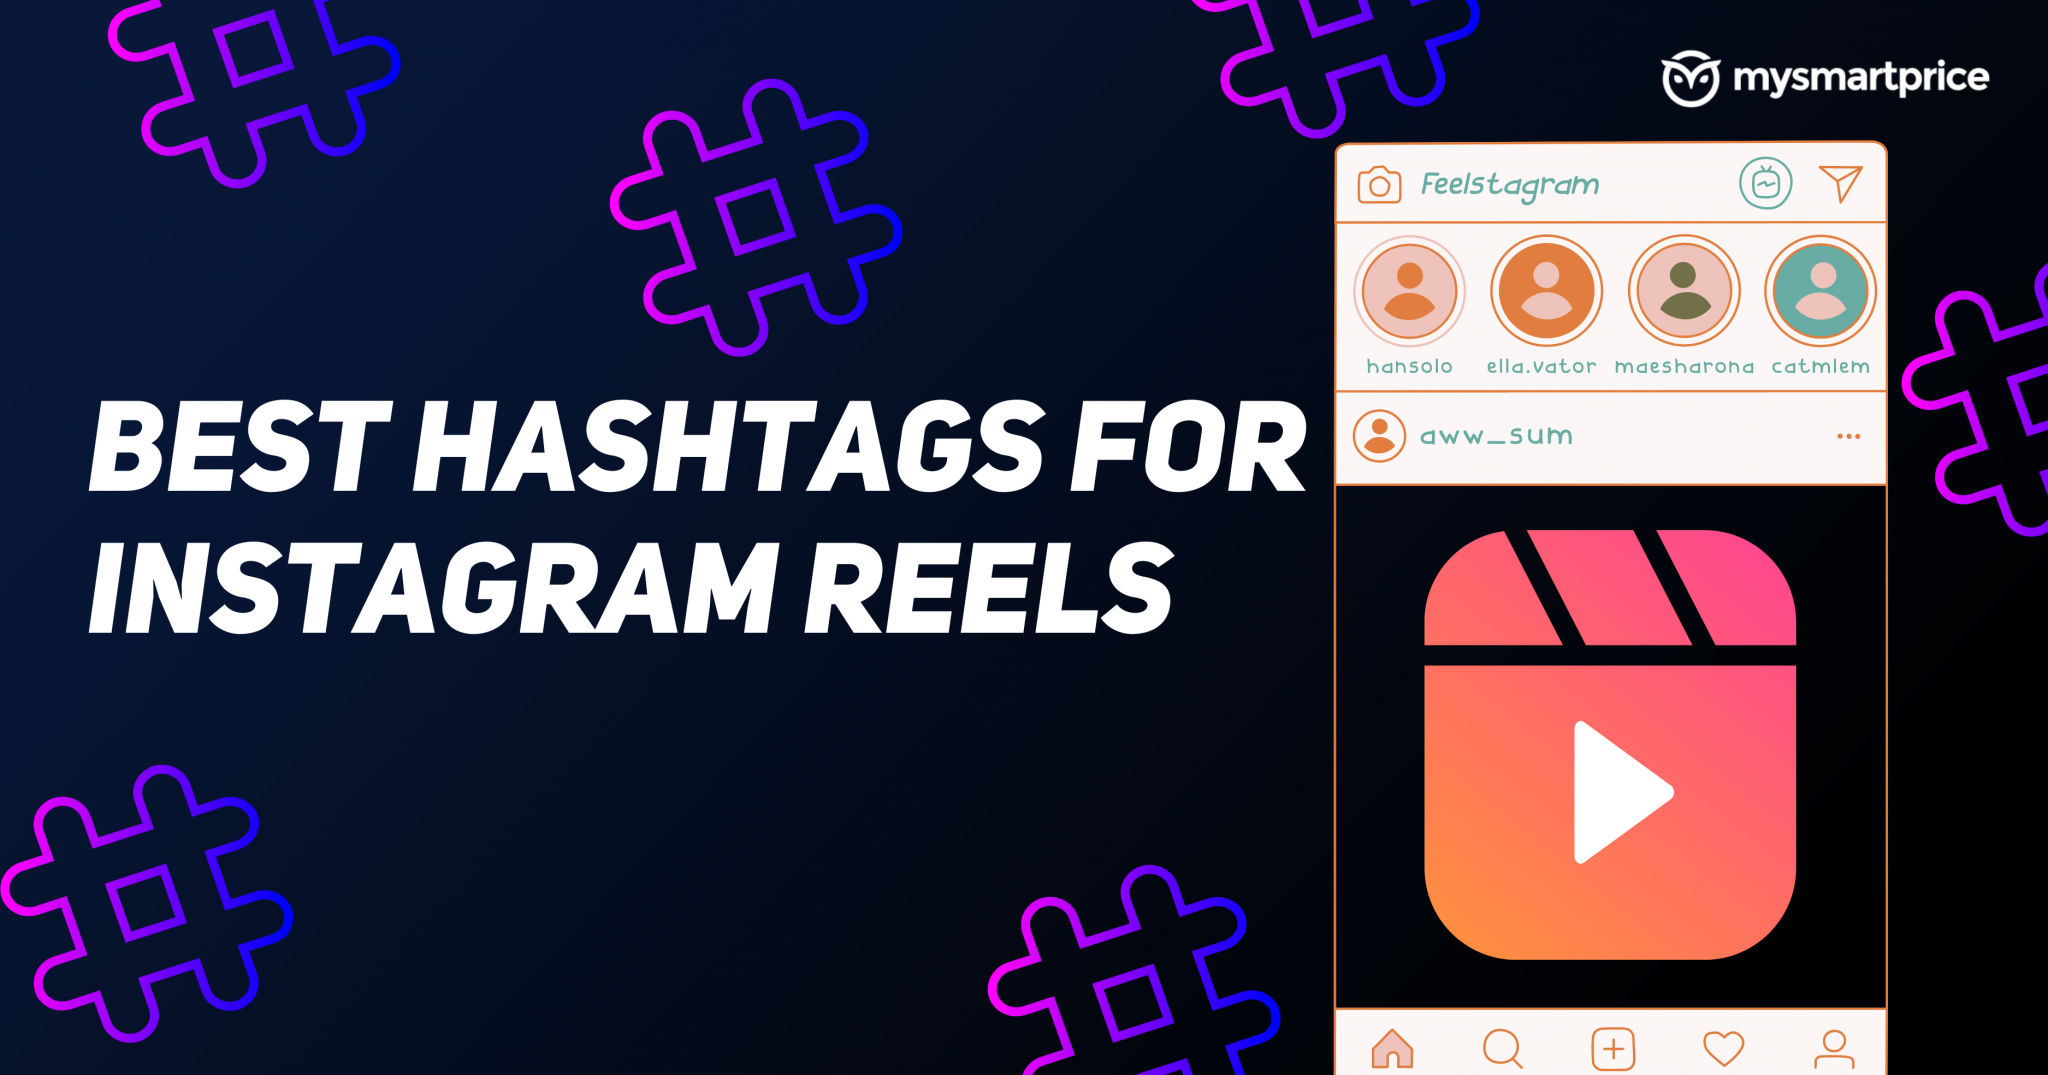 Hashtags for Instagram Reels 1000+ Best, Trending, Viral, Love, and